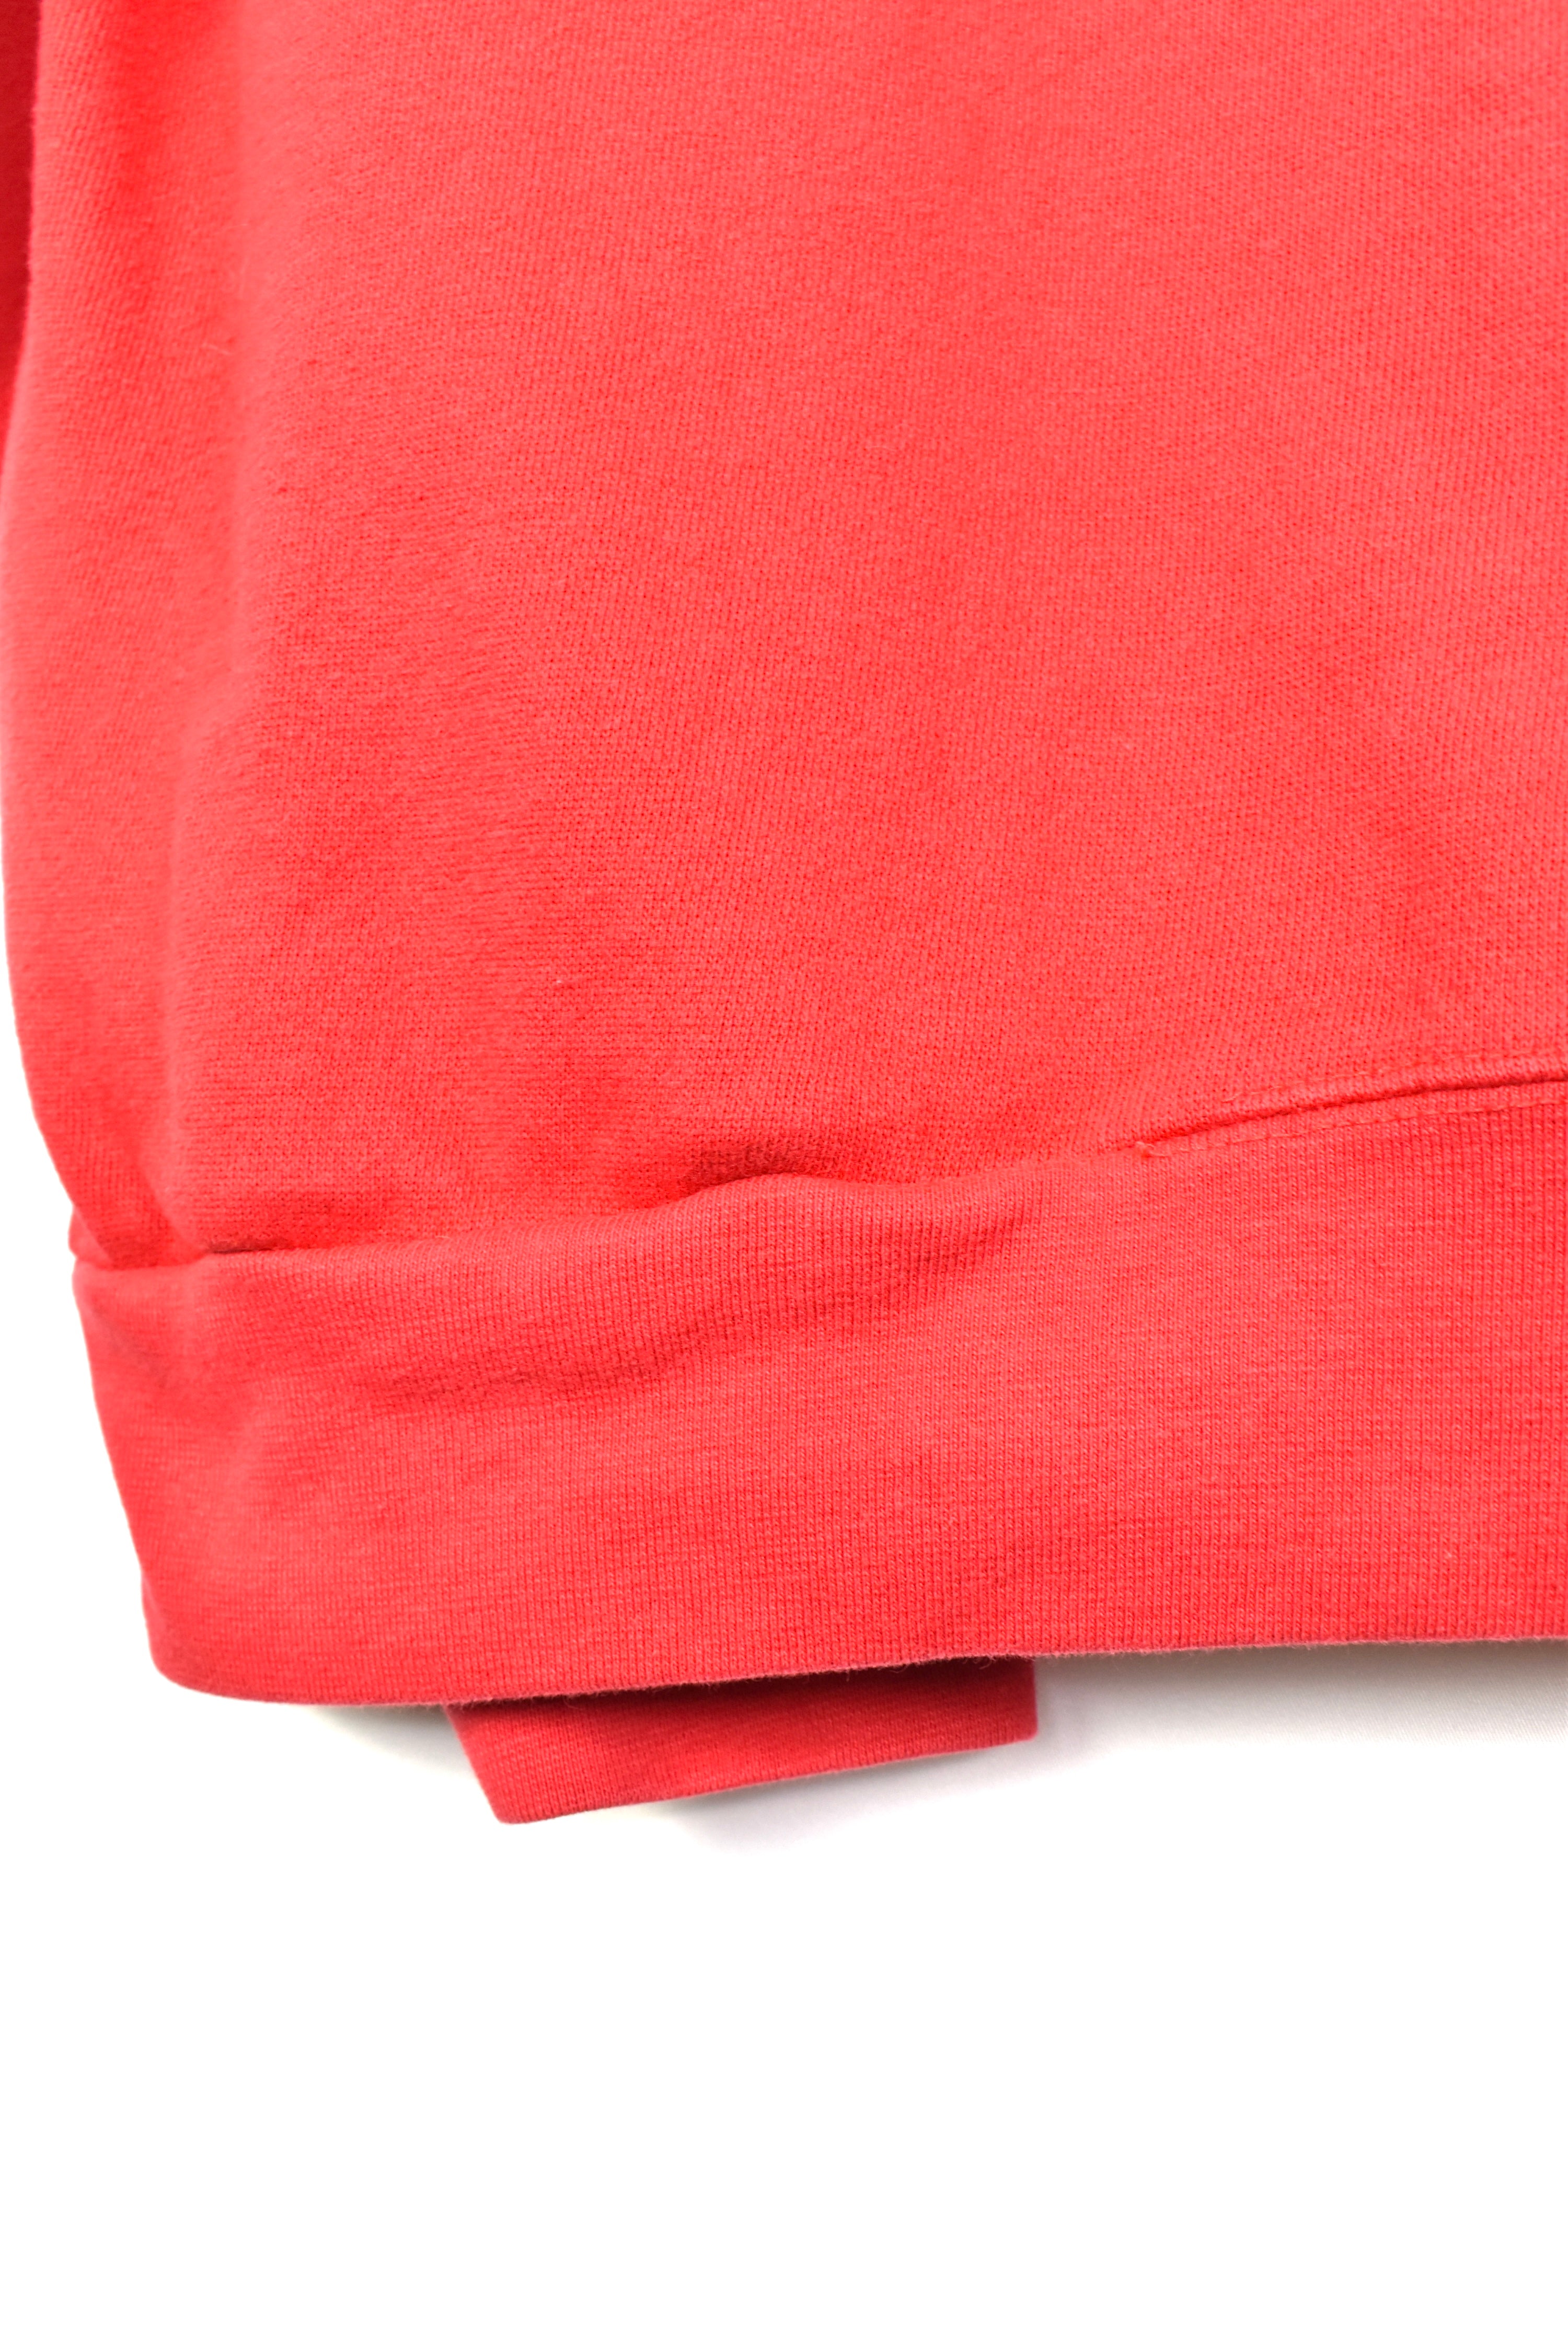 Vintage Chicago Blackhawks hoodie, NHL graphic sweatshirt - large, red PRO SPORT